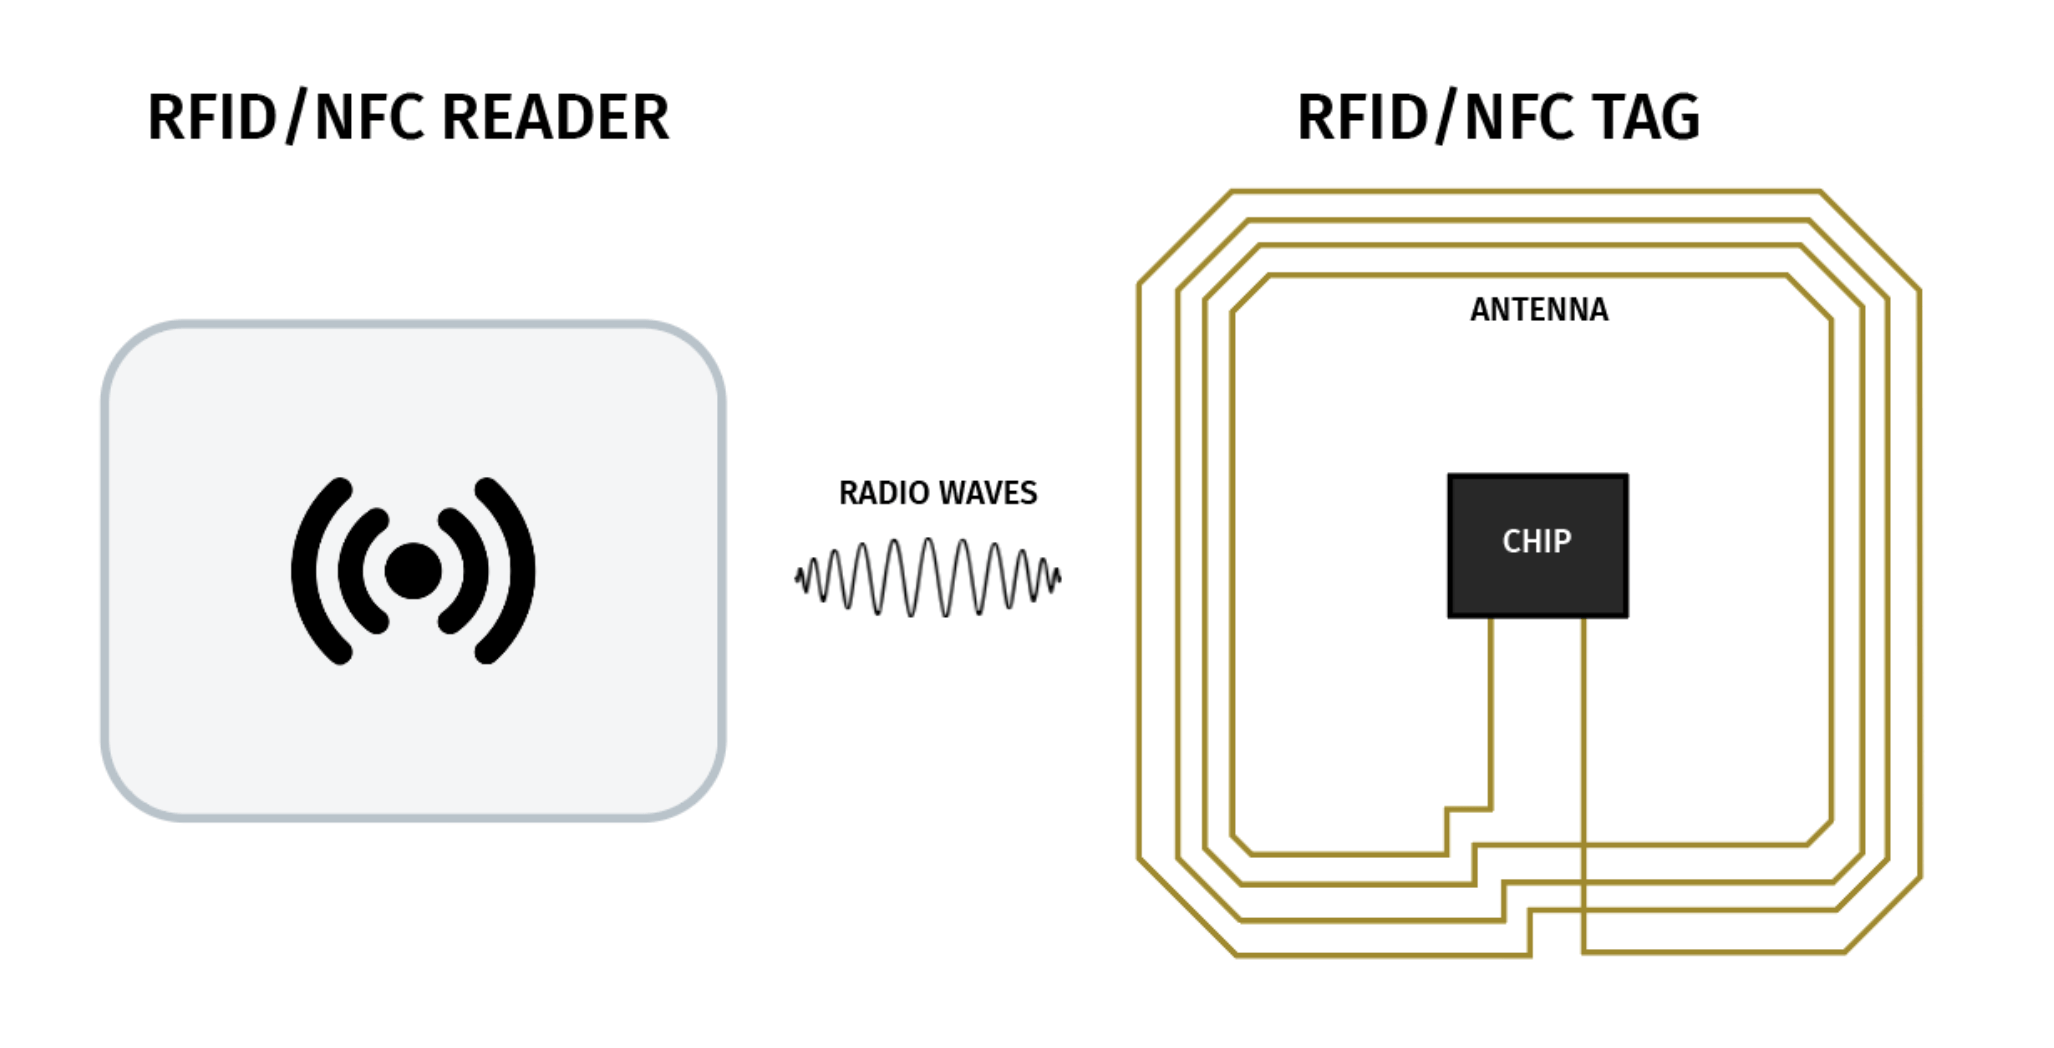 RFID/NFC reader and tag